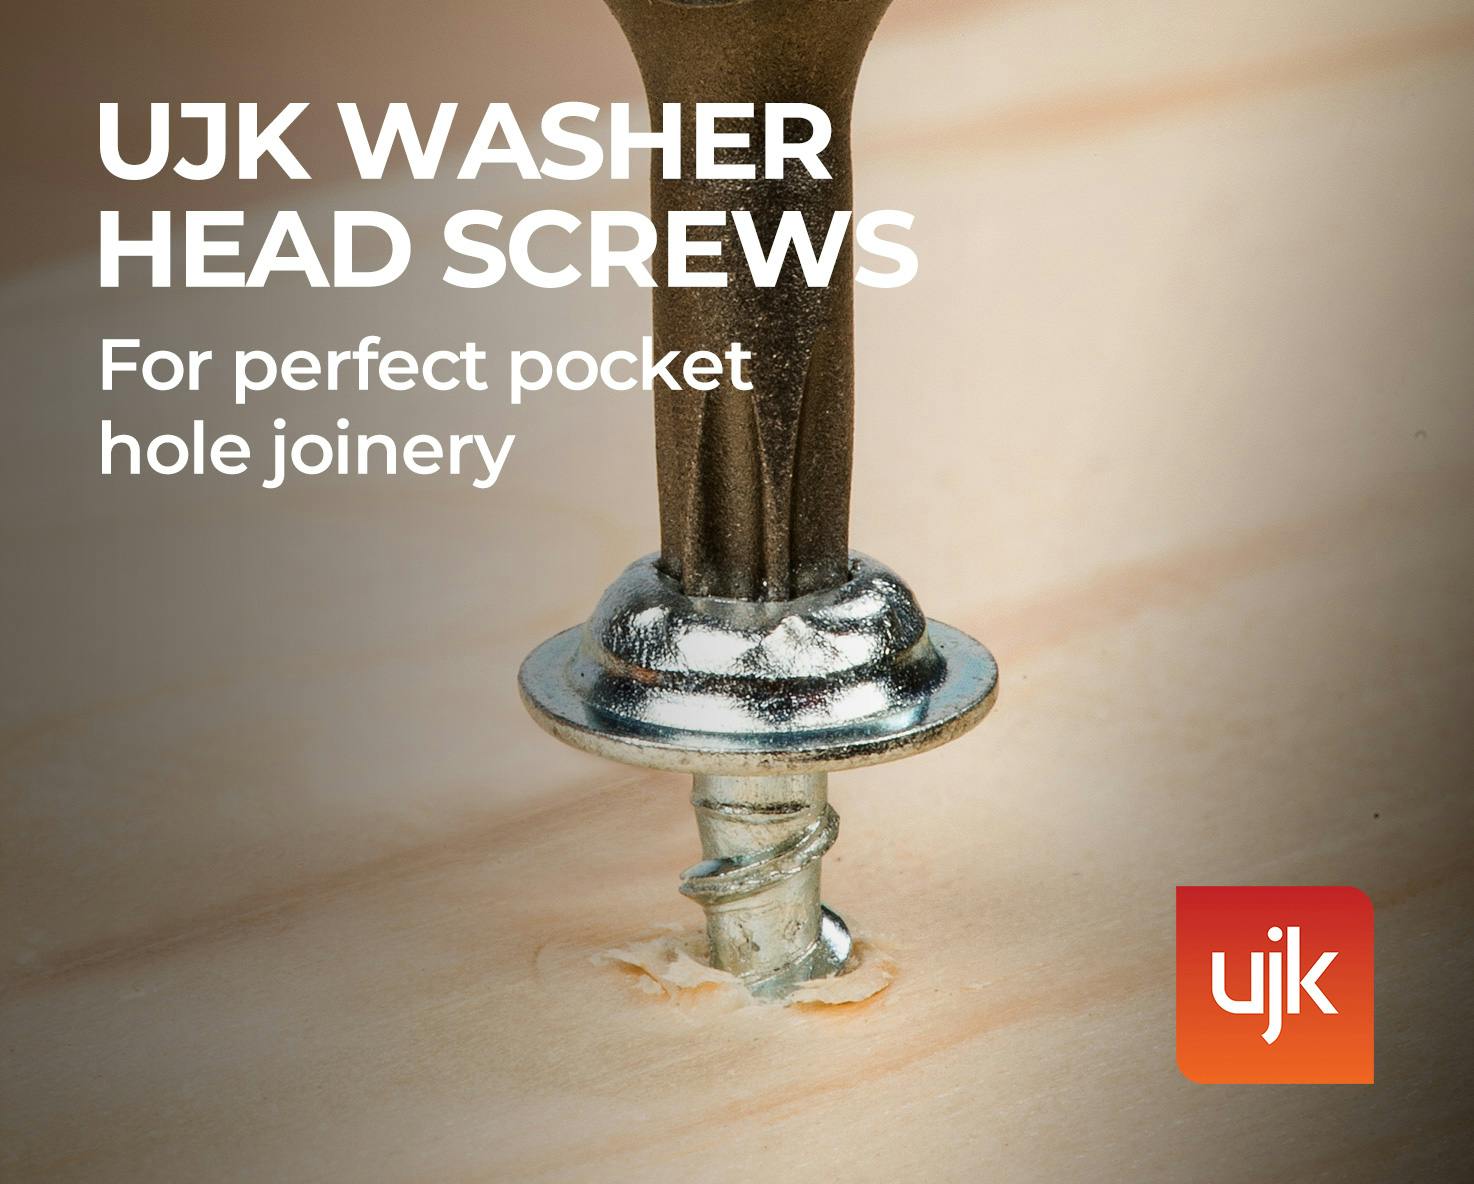 UJK washer head screws